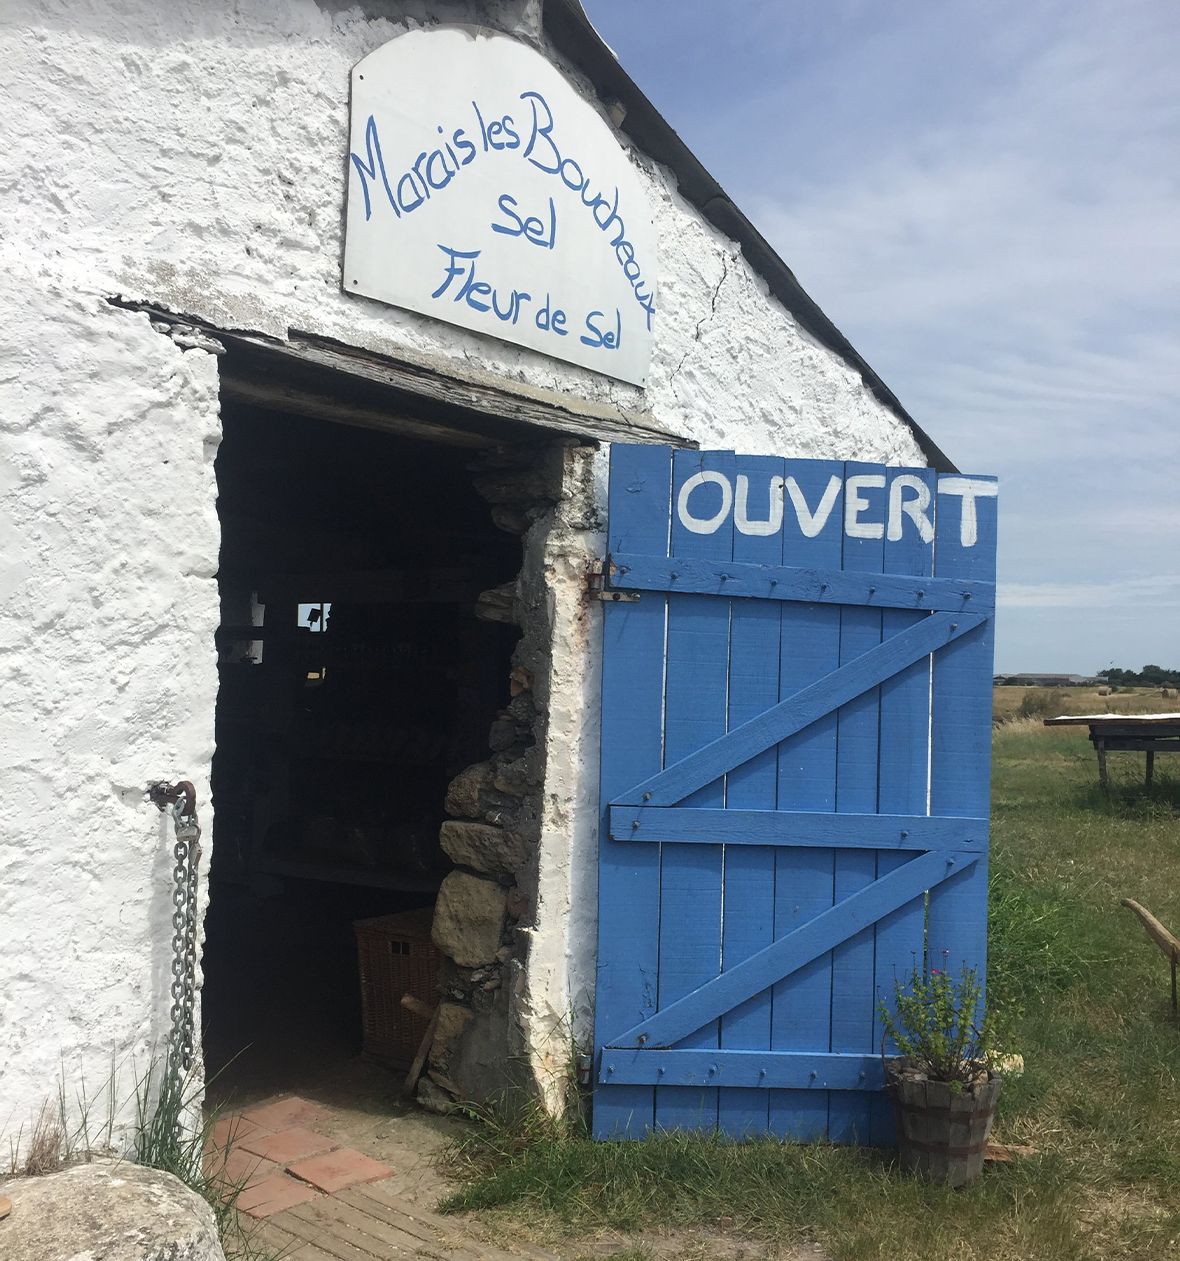 A hut in the Vendée where a local salt producer sells her salt